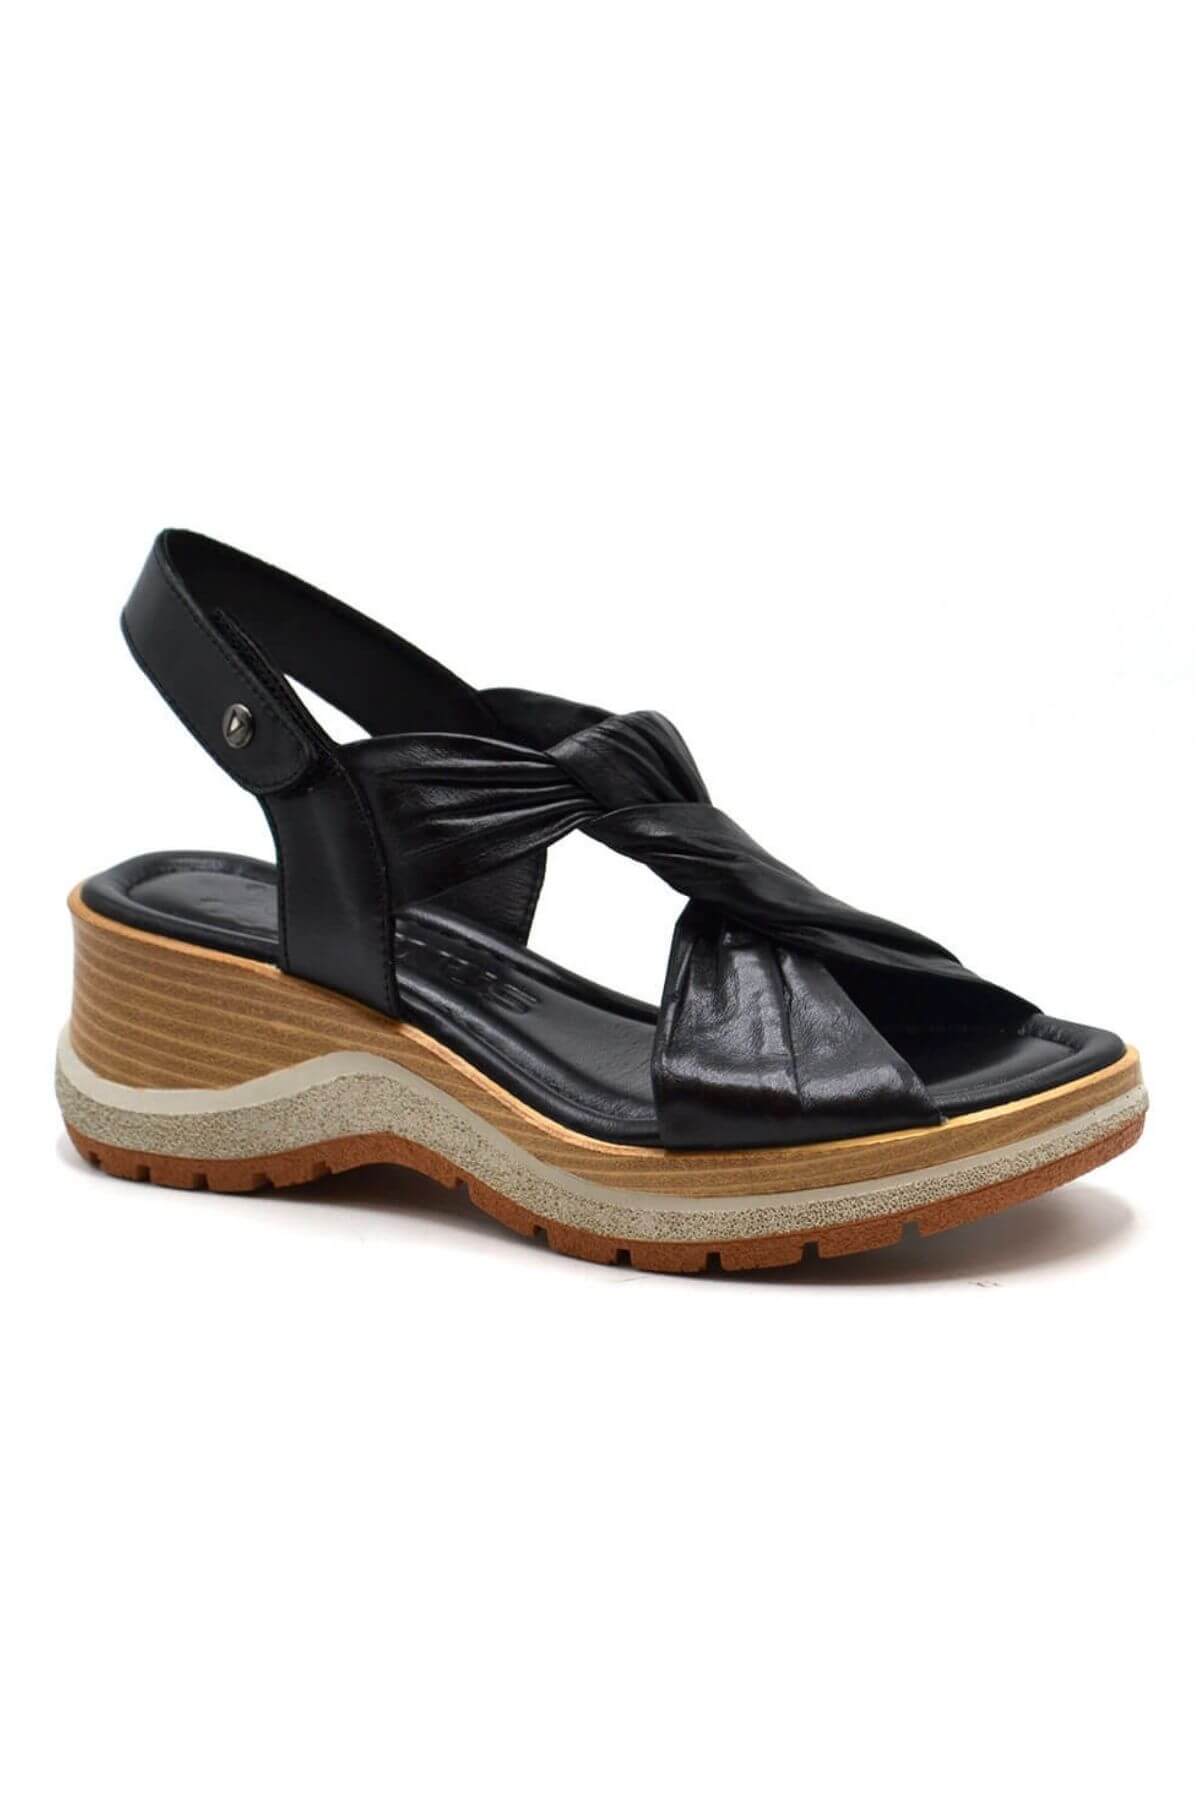 Kadın Comfort Deri Sandalet Siyah 2409901Y - Thumbnail